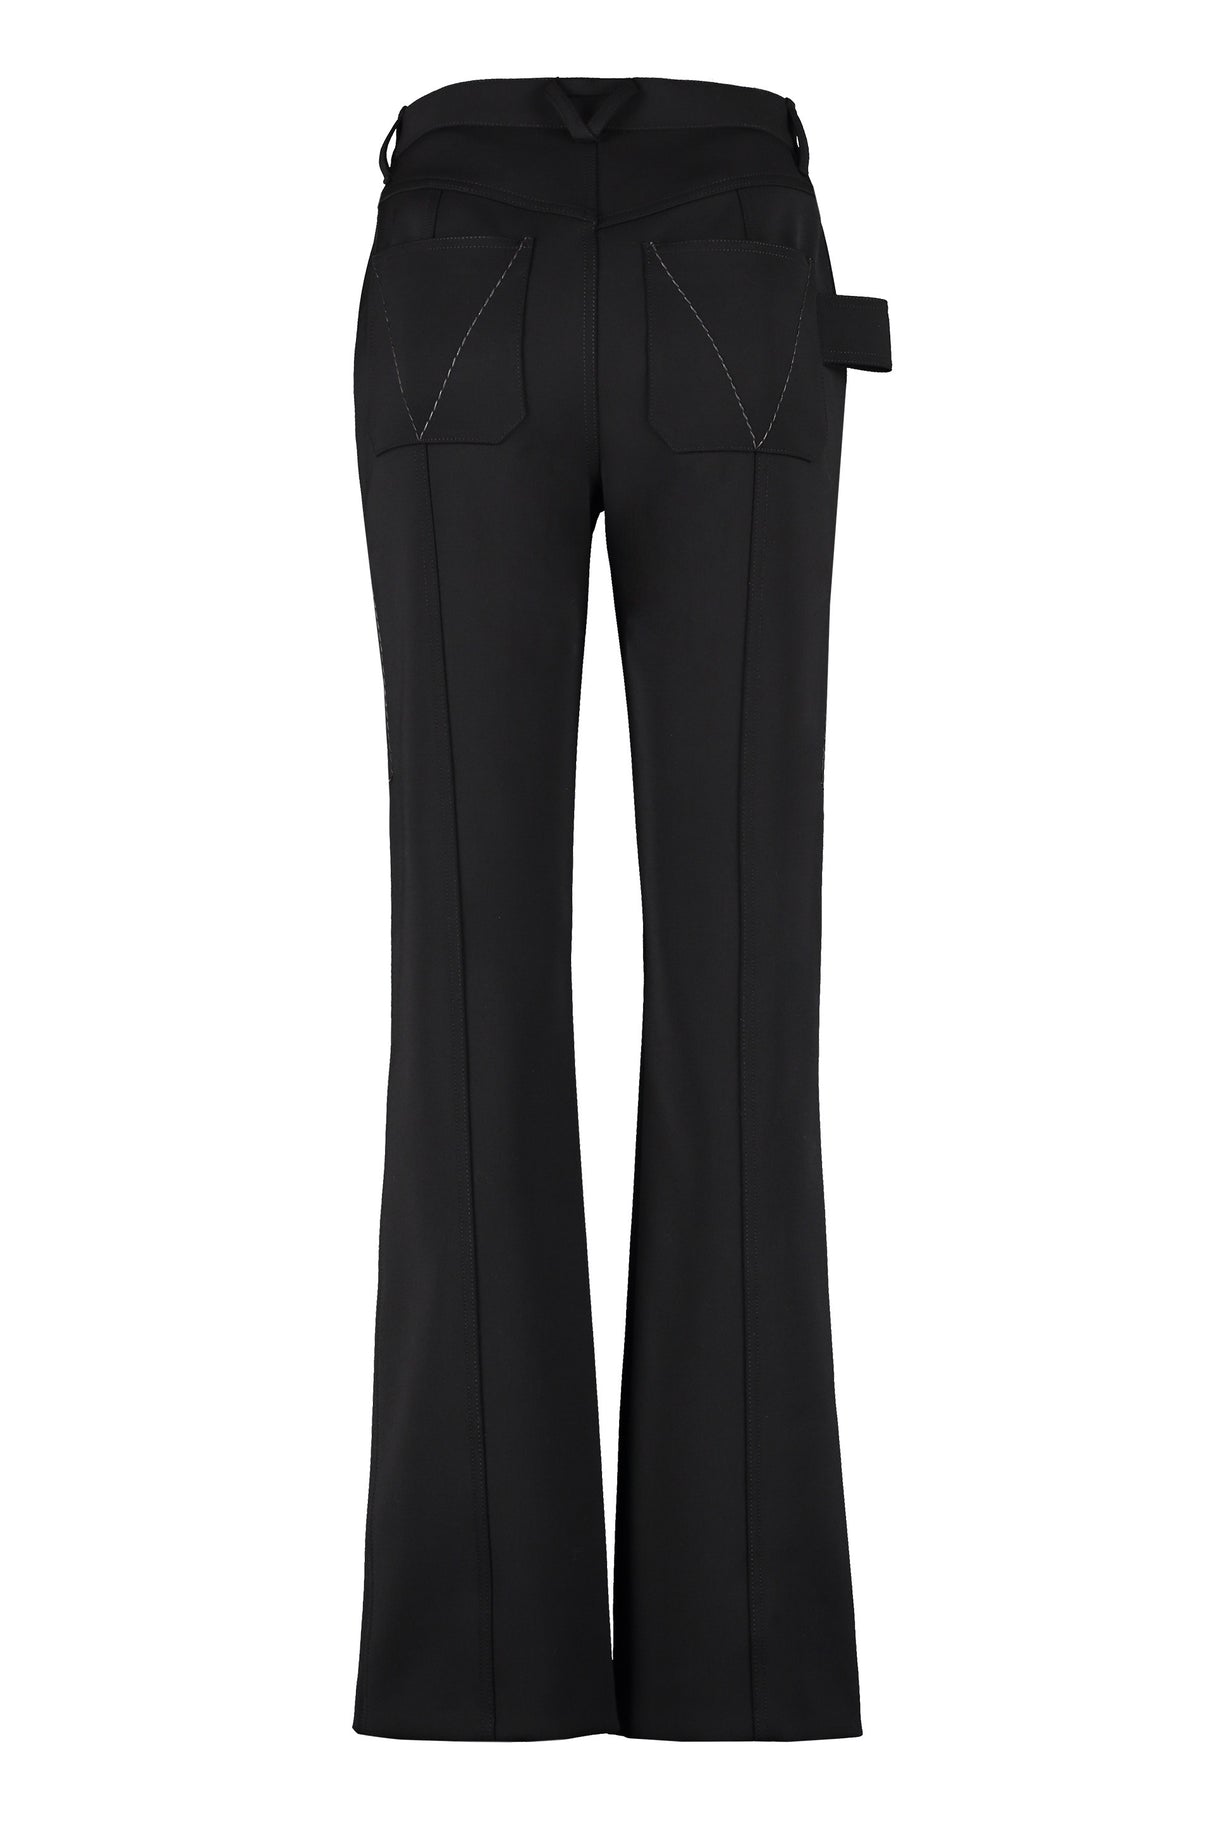 BOTTEGA VENETA Black Wool Trousers for Women from Salon 02 Collection